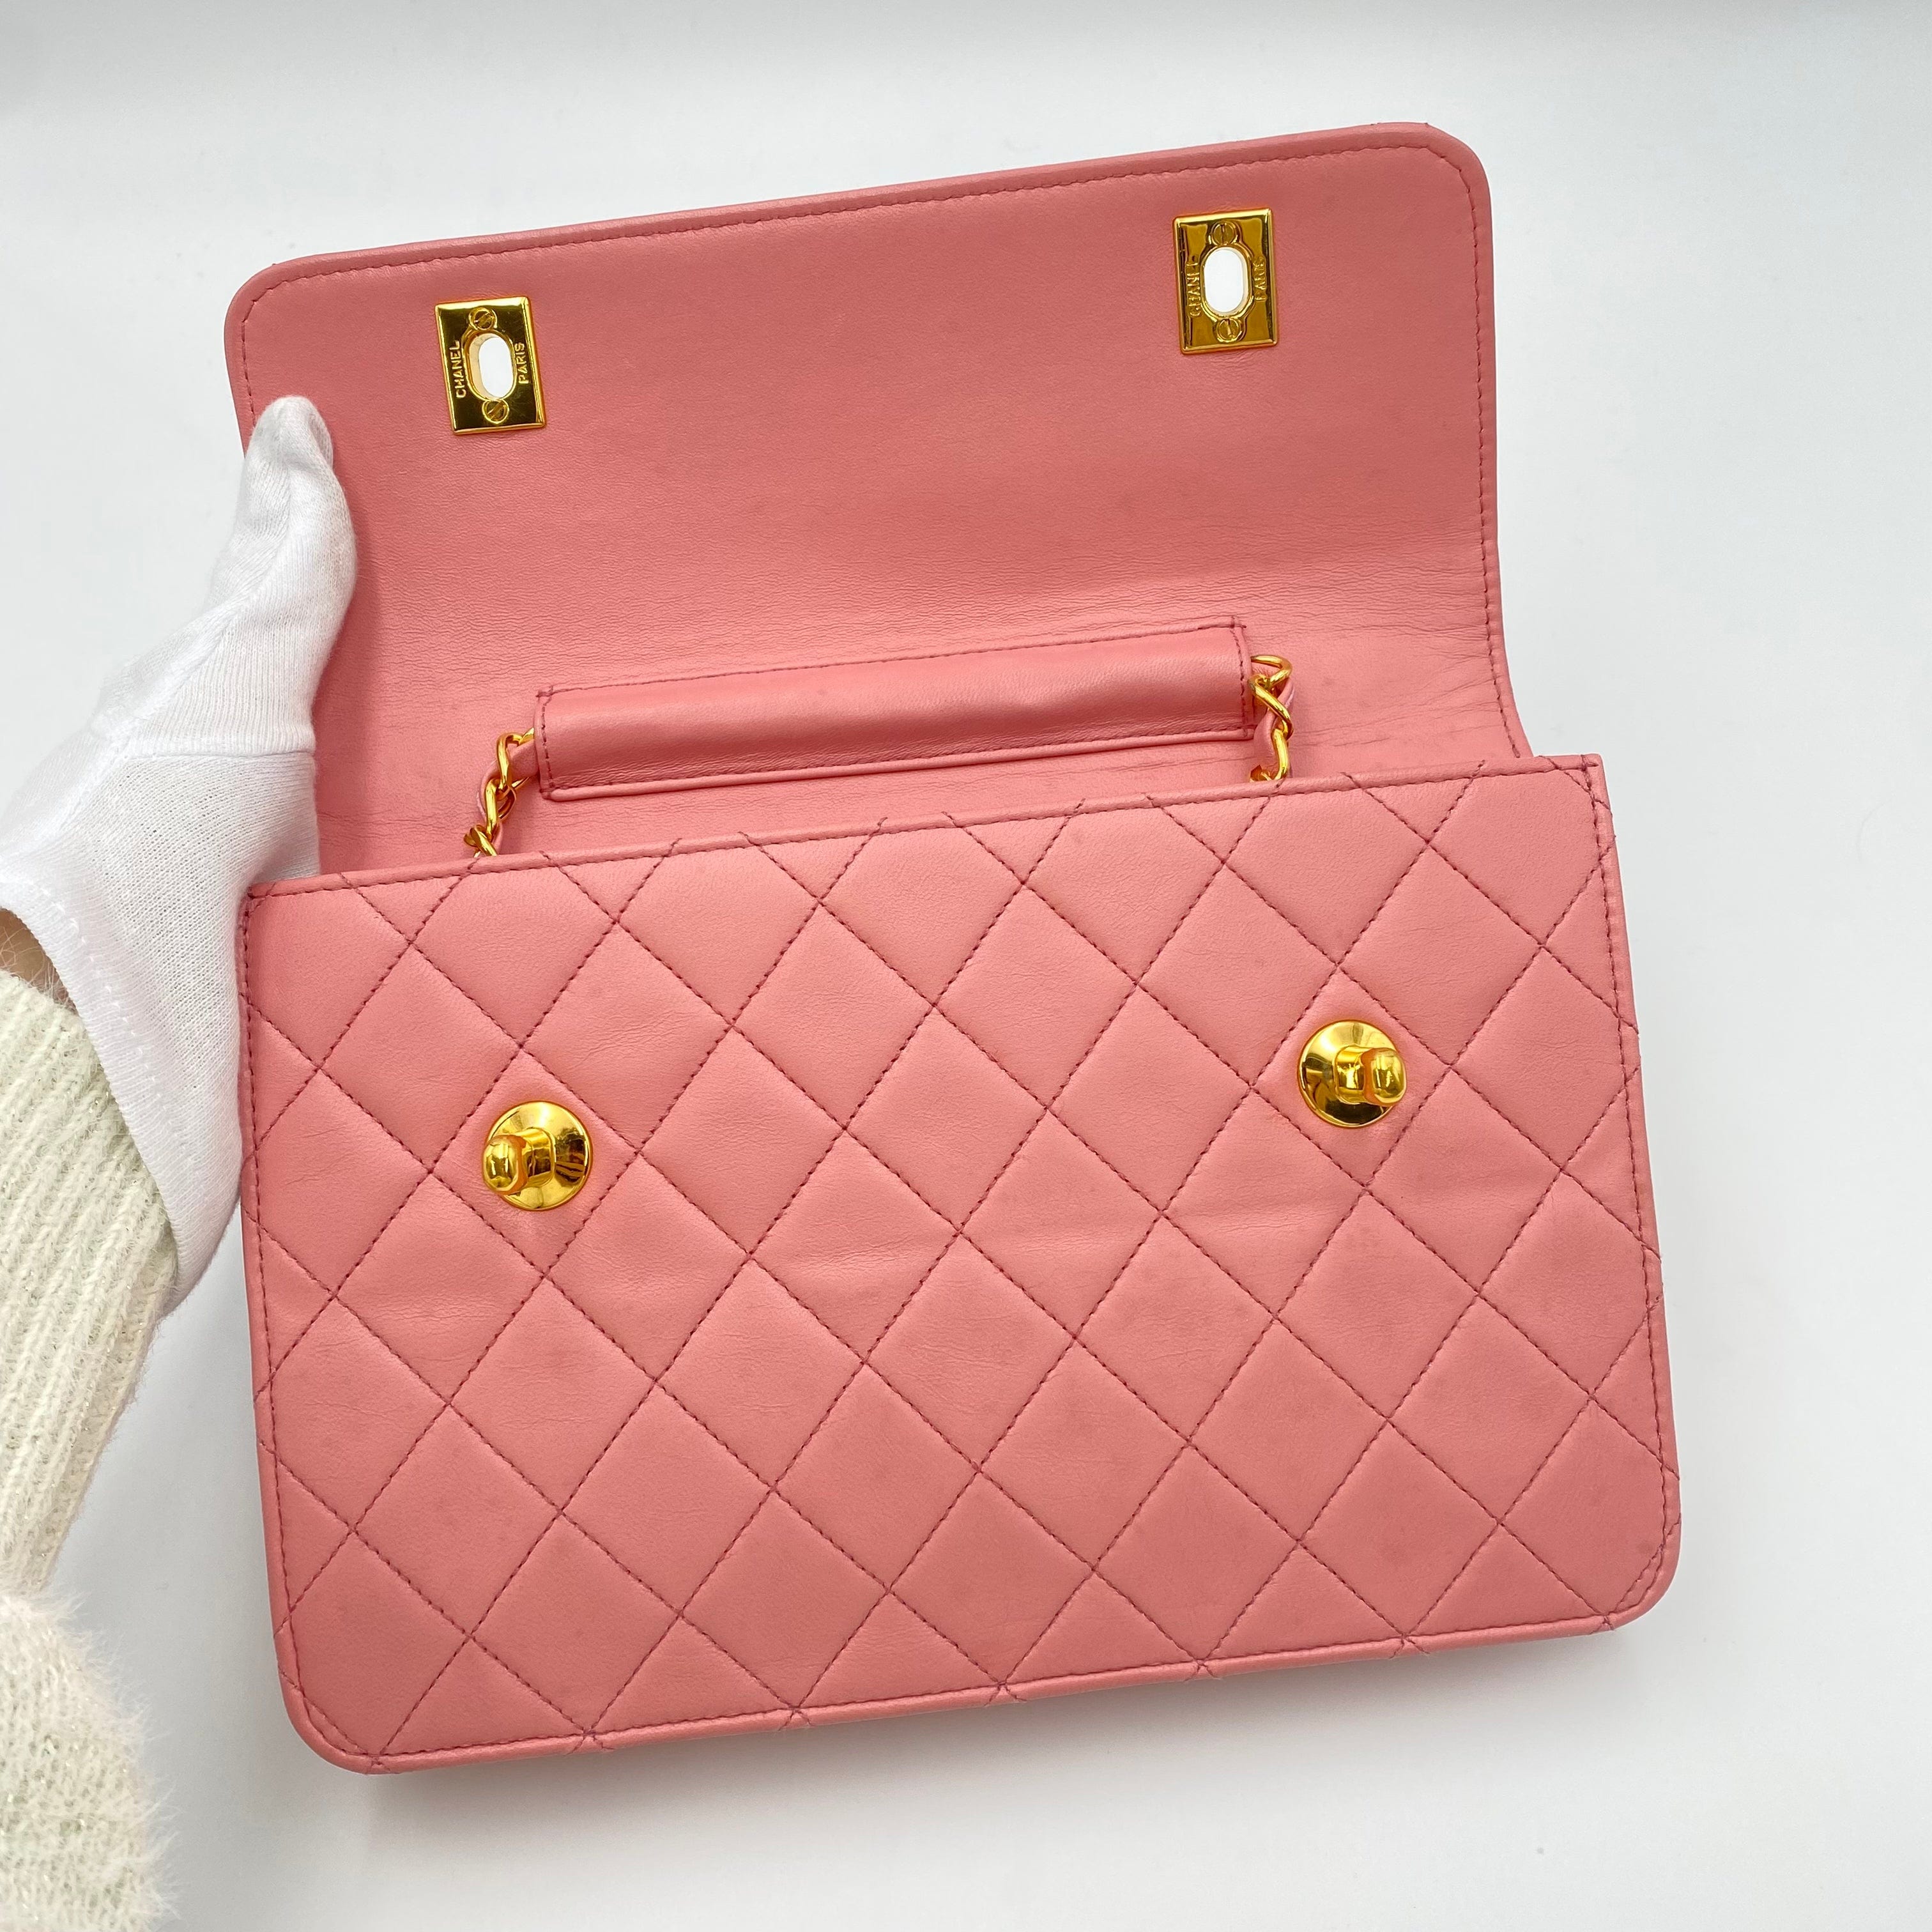 Chanel CHANEL VINTAGE DOUBLE TURN LOCK CHAIN SHOULDER BAG PINK LAMB SKIN 90218037